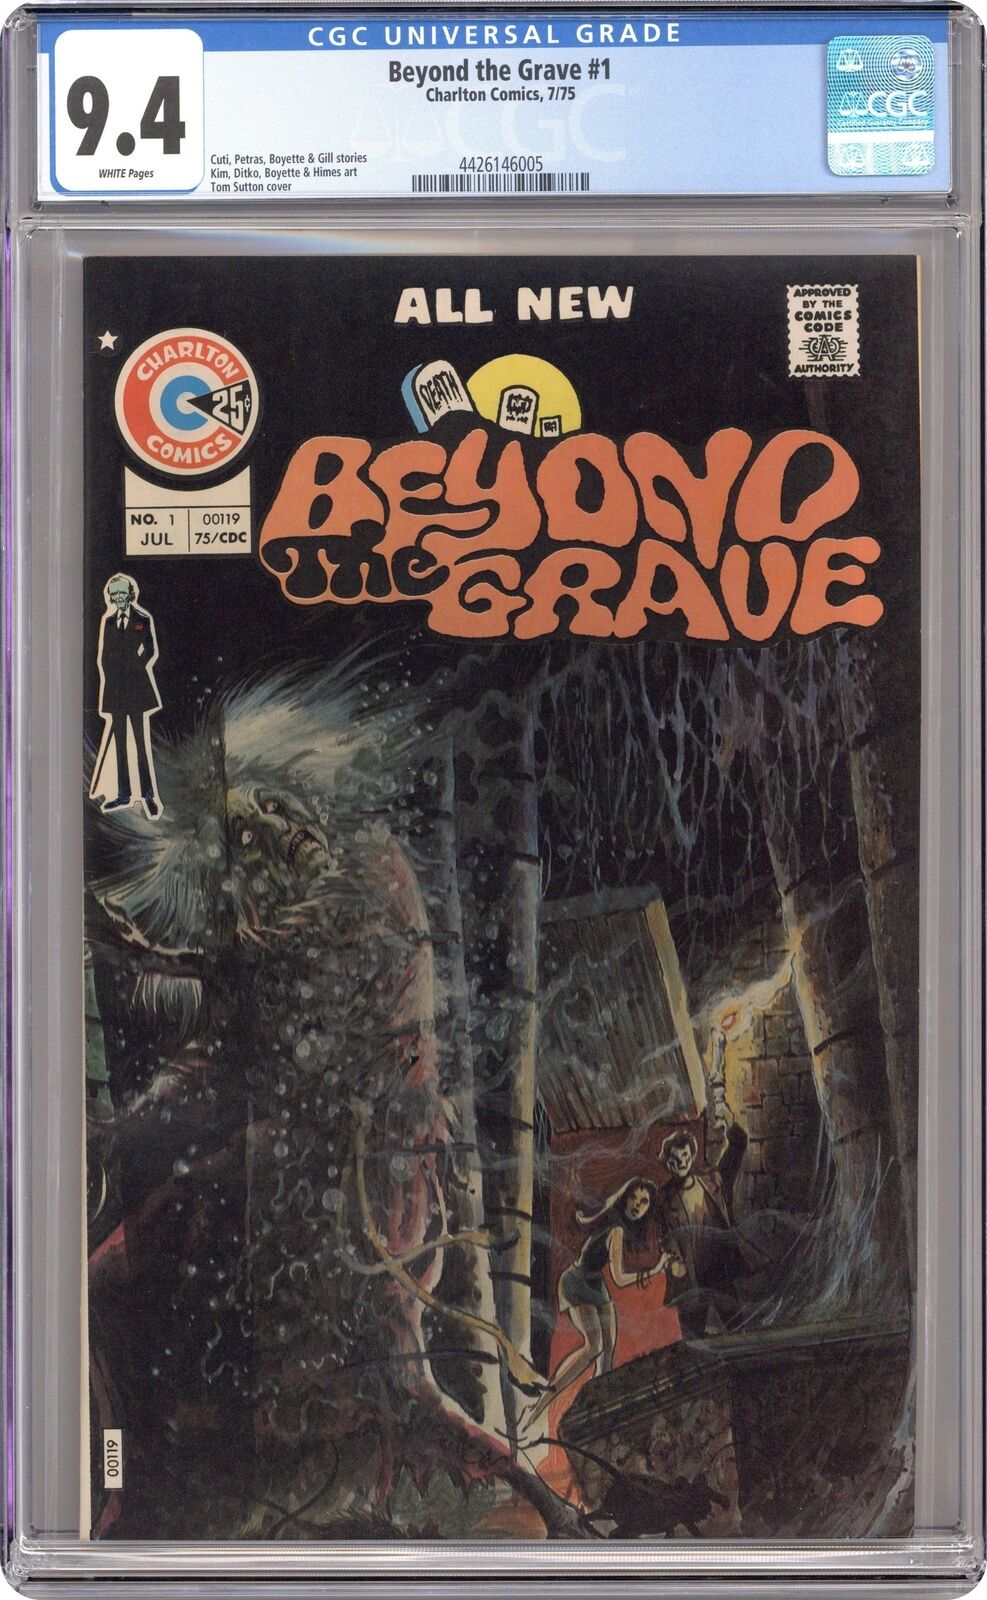 Beyond the Grave #1 CGC 9.4 1975 4426146005